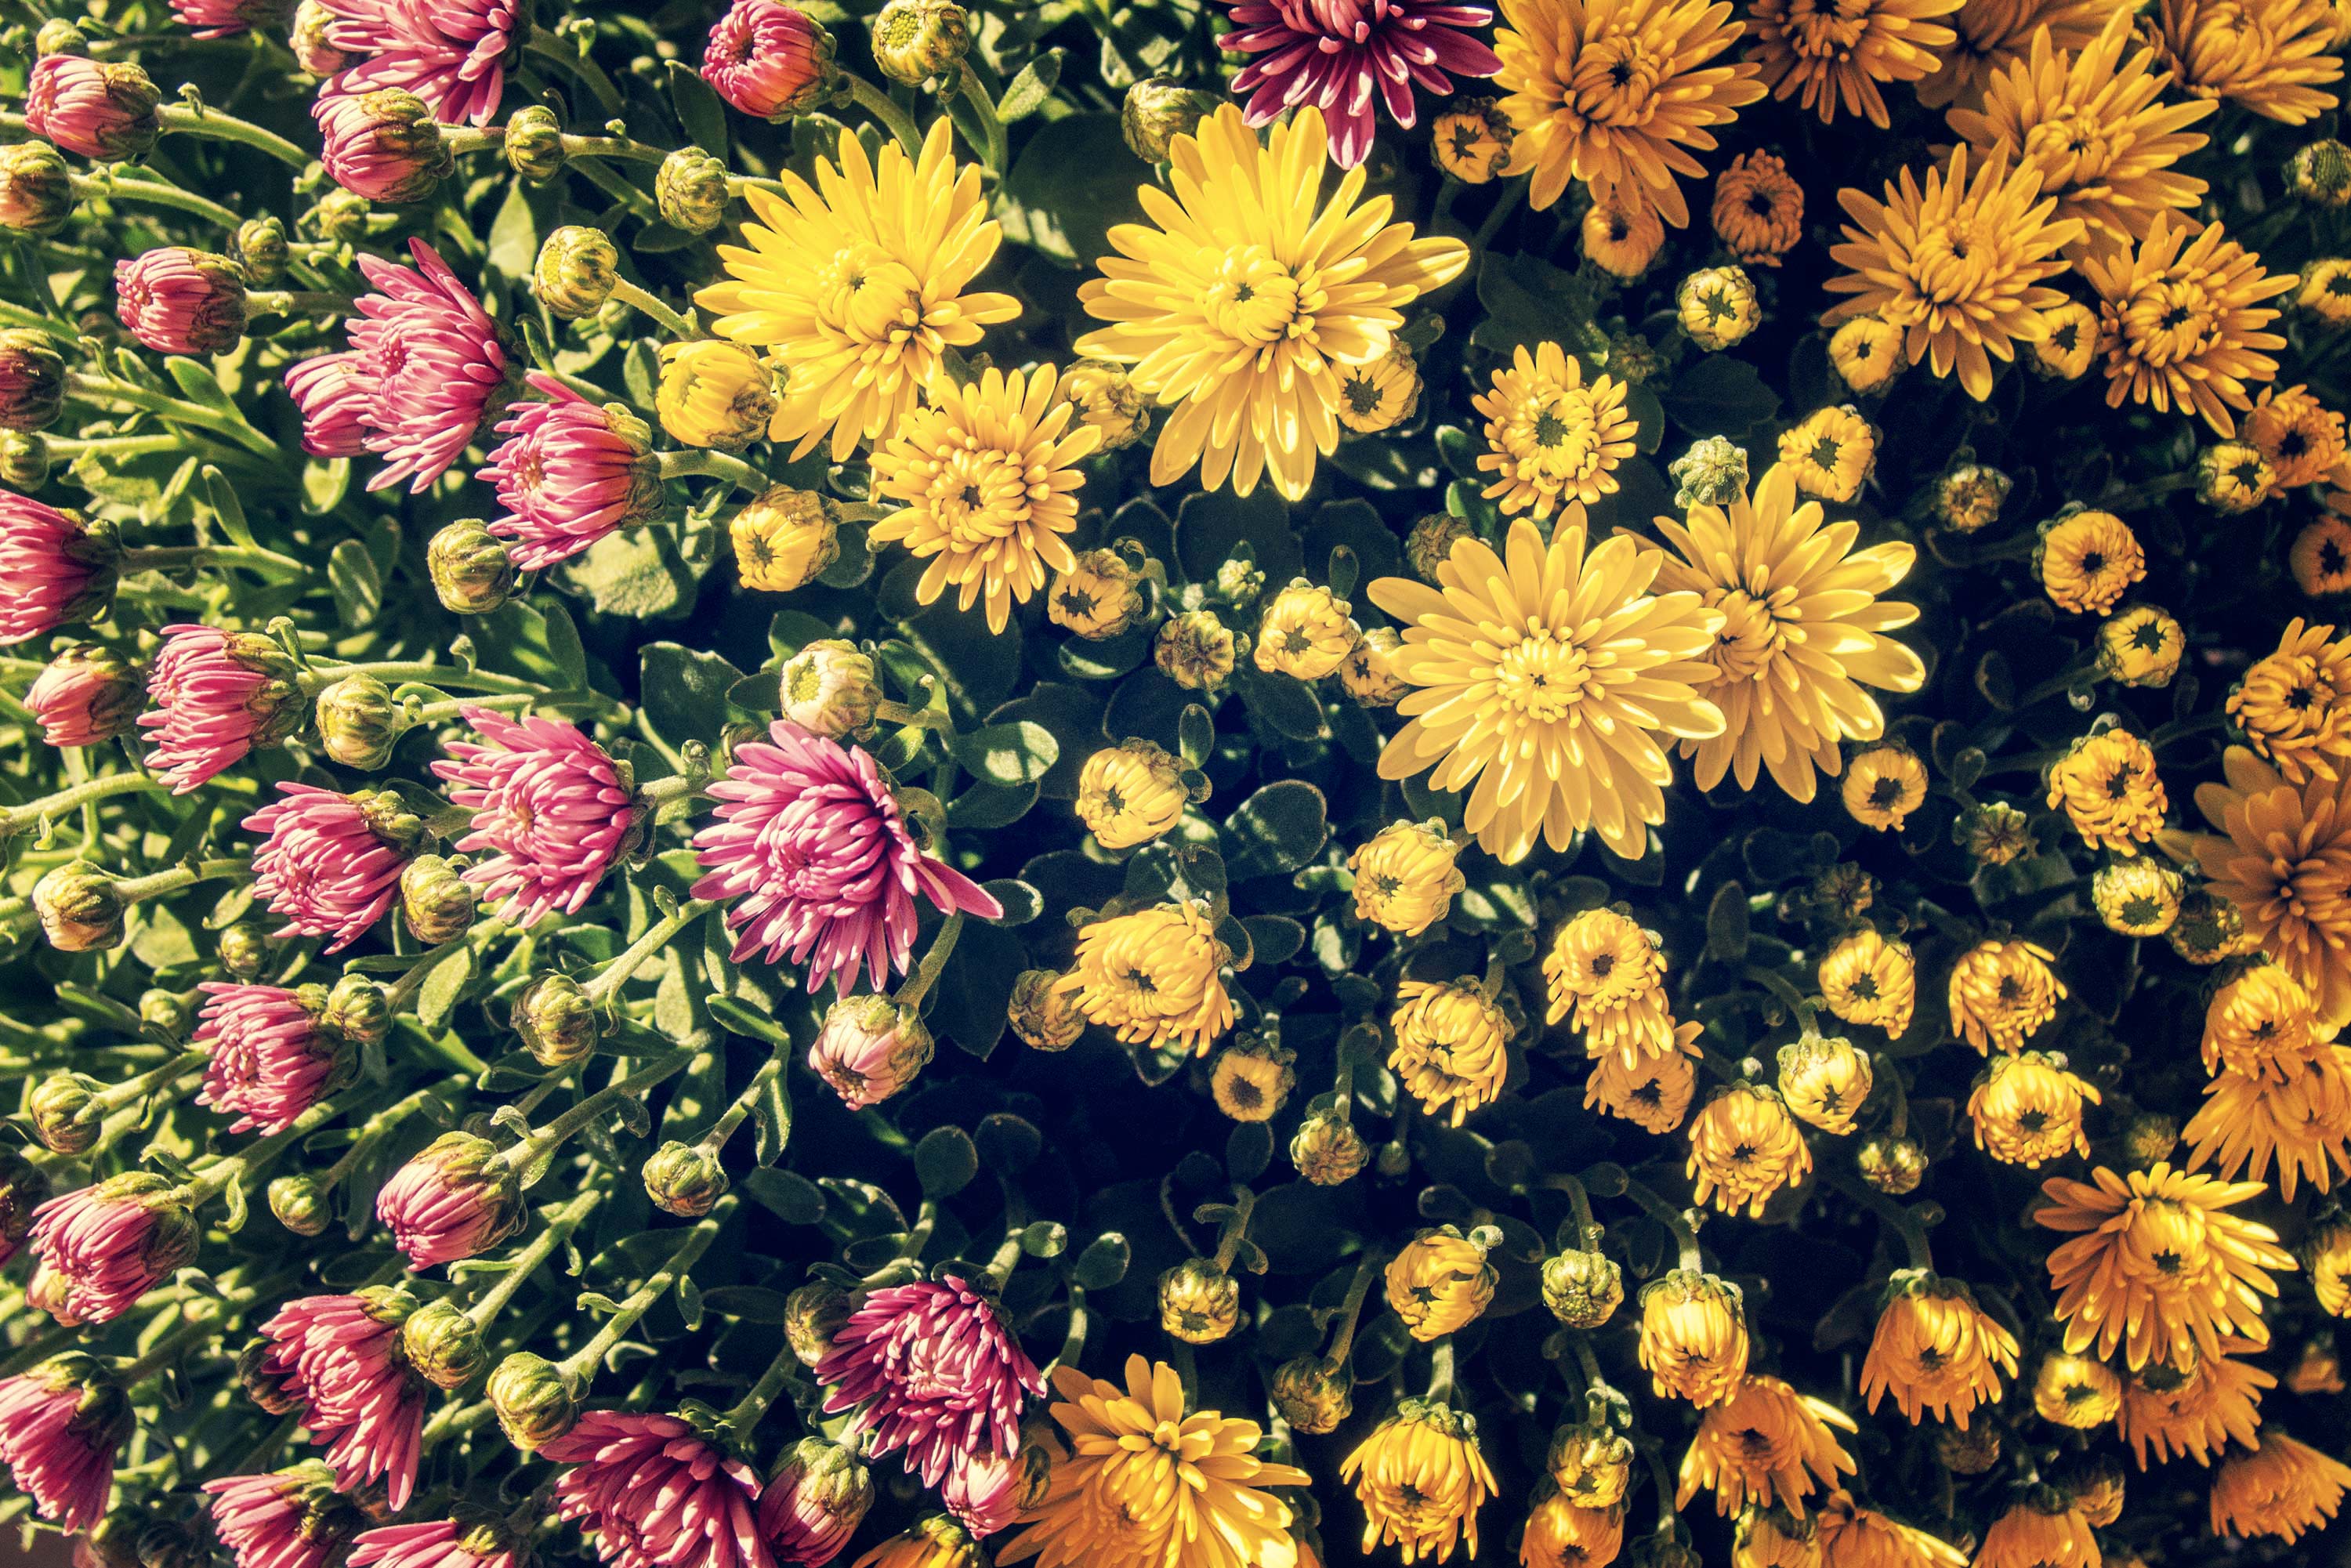 Free Image: Yellow Flowers | Libreshot Public Domain Photos